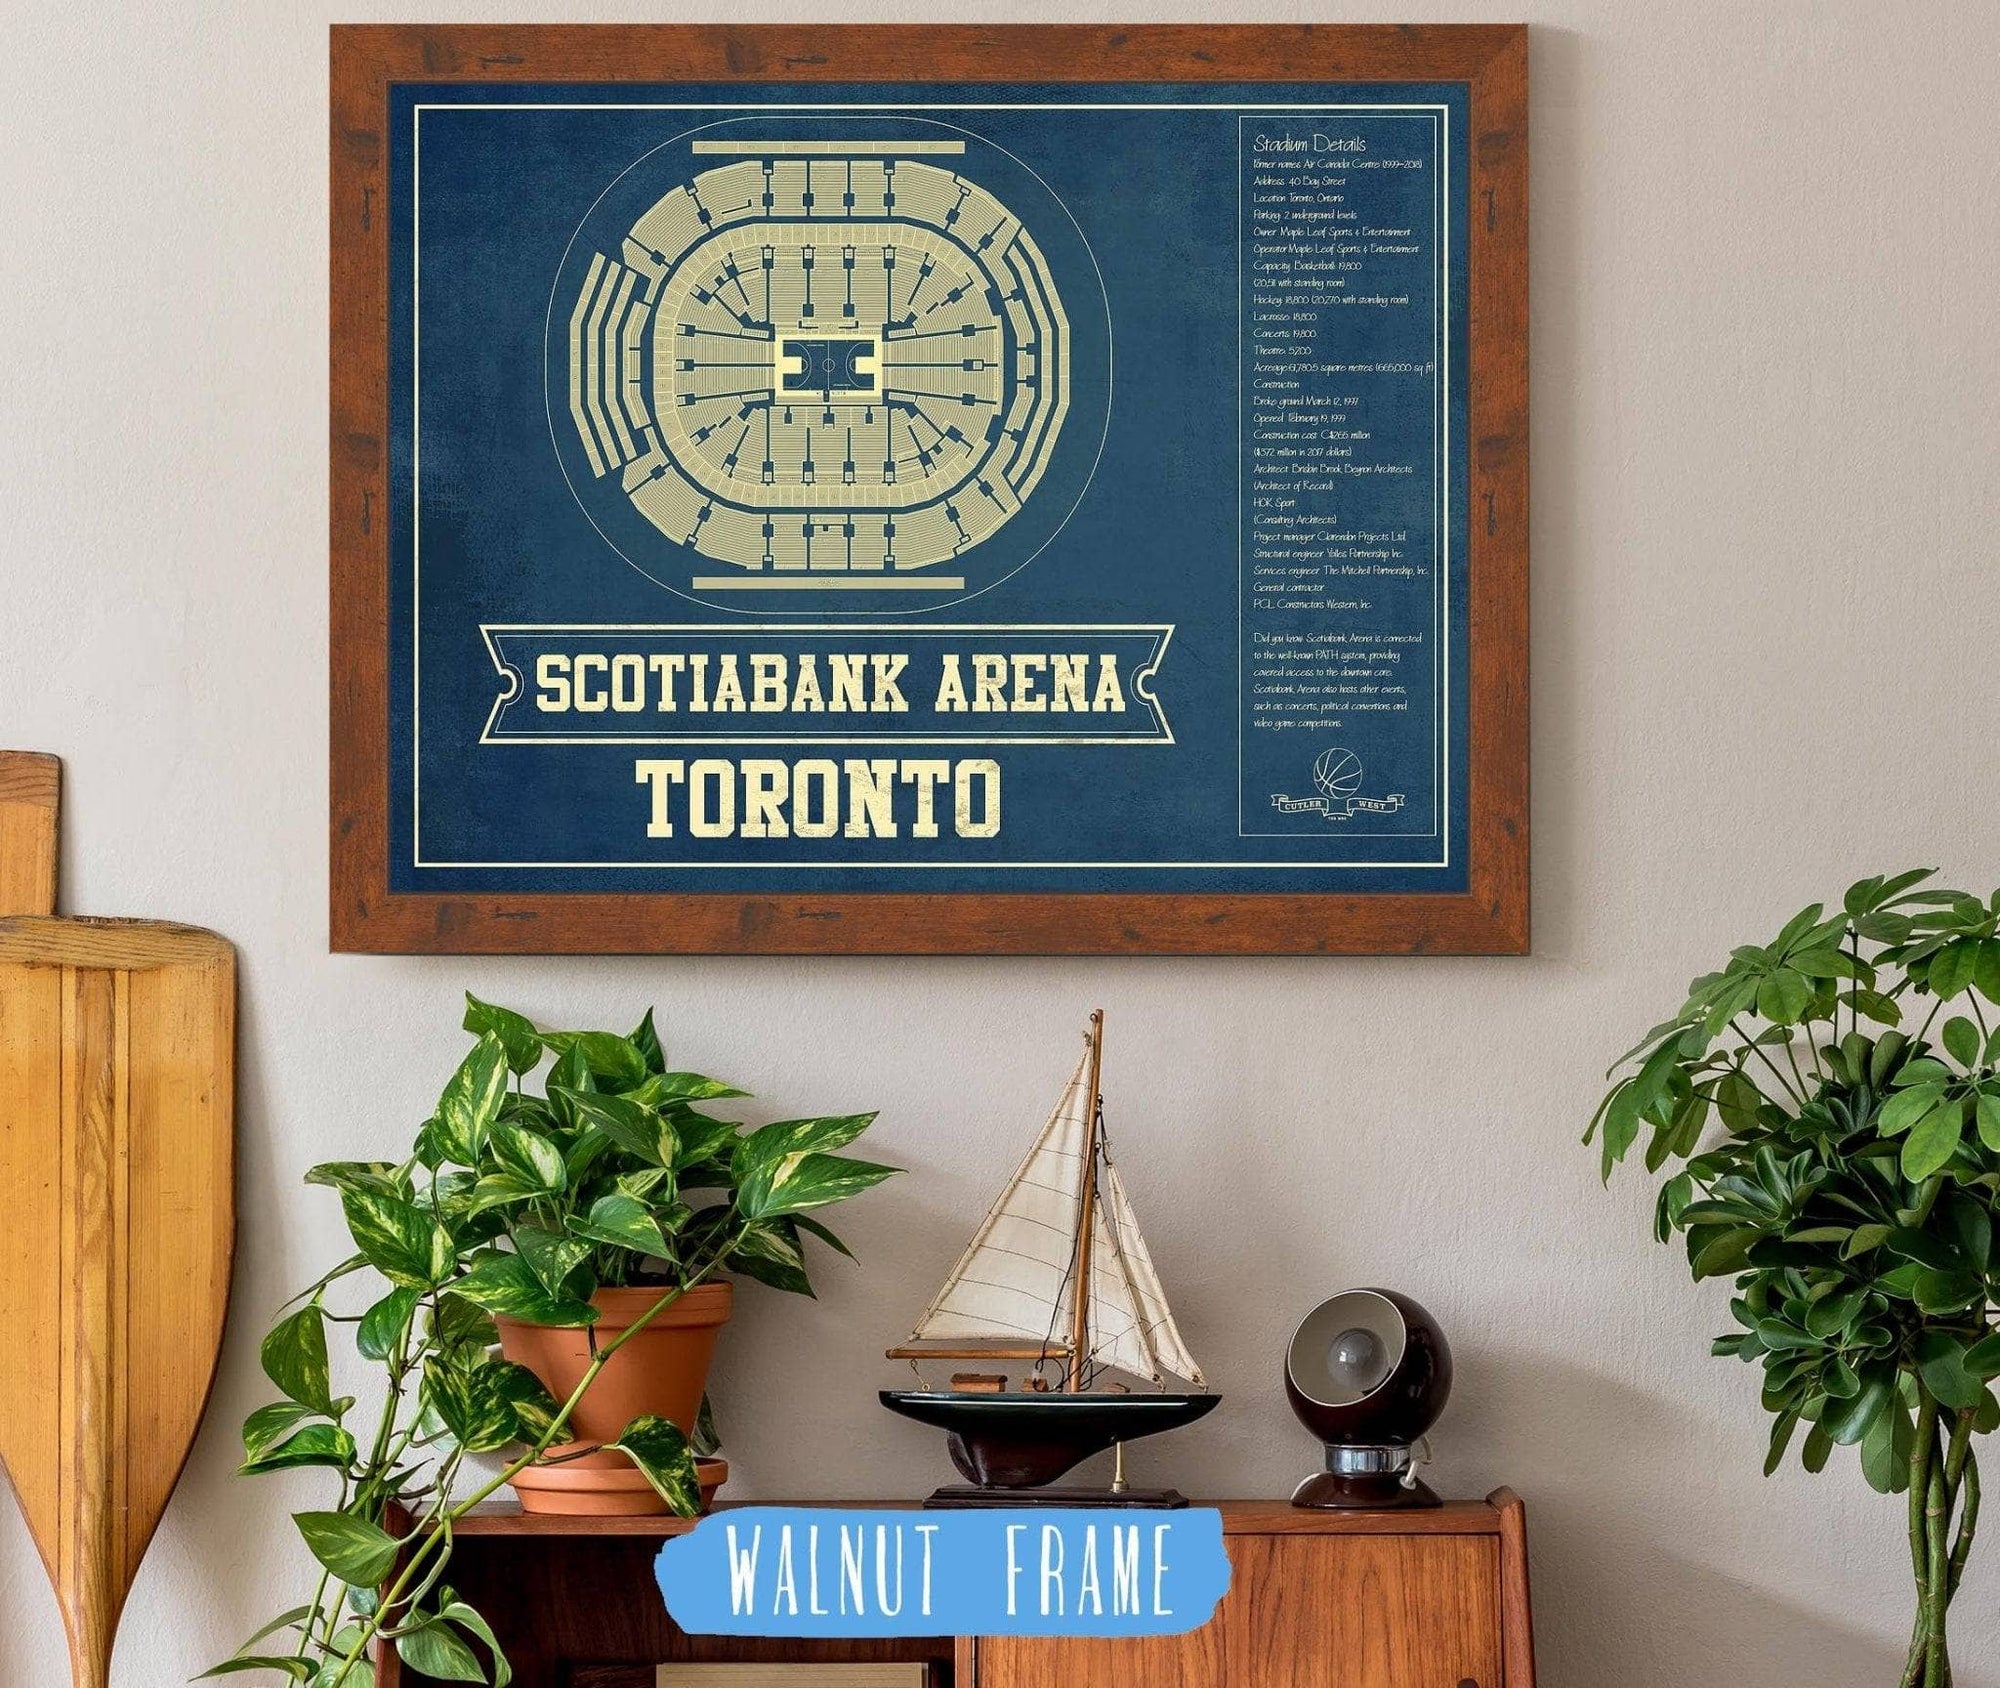 Cutler West Basketball Collection Toronto Raptors 2019 NBA Champions - Scotiabank Arena Vintage Basketball Print